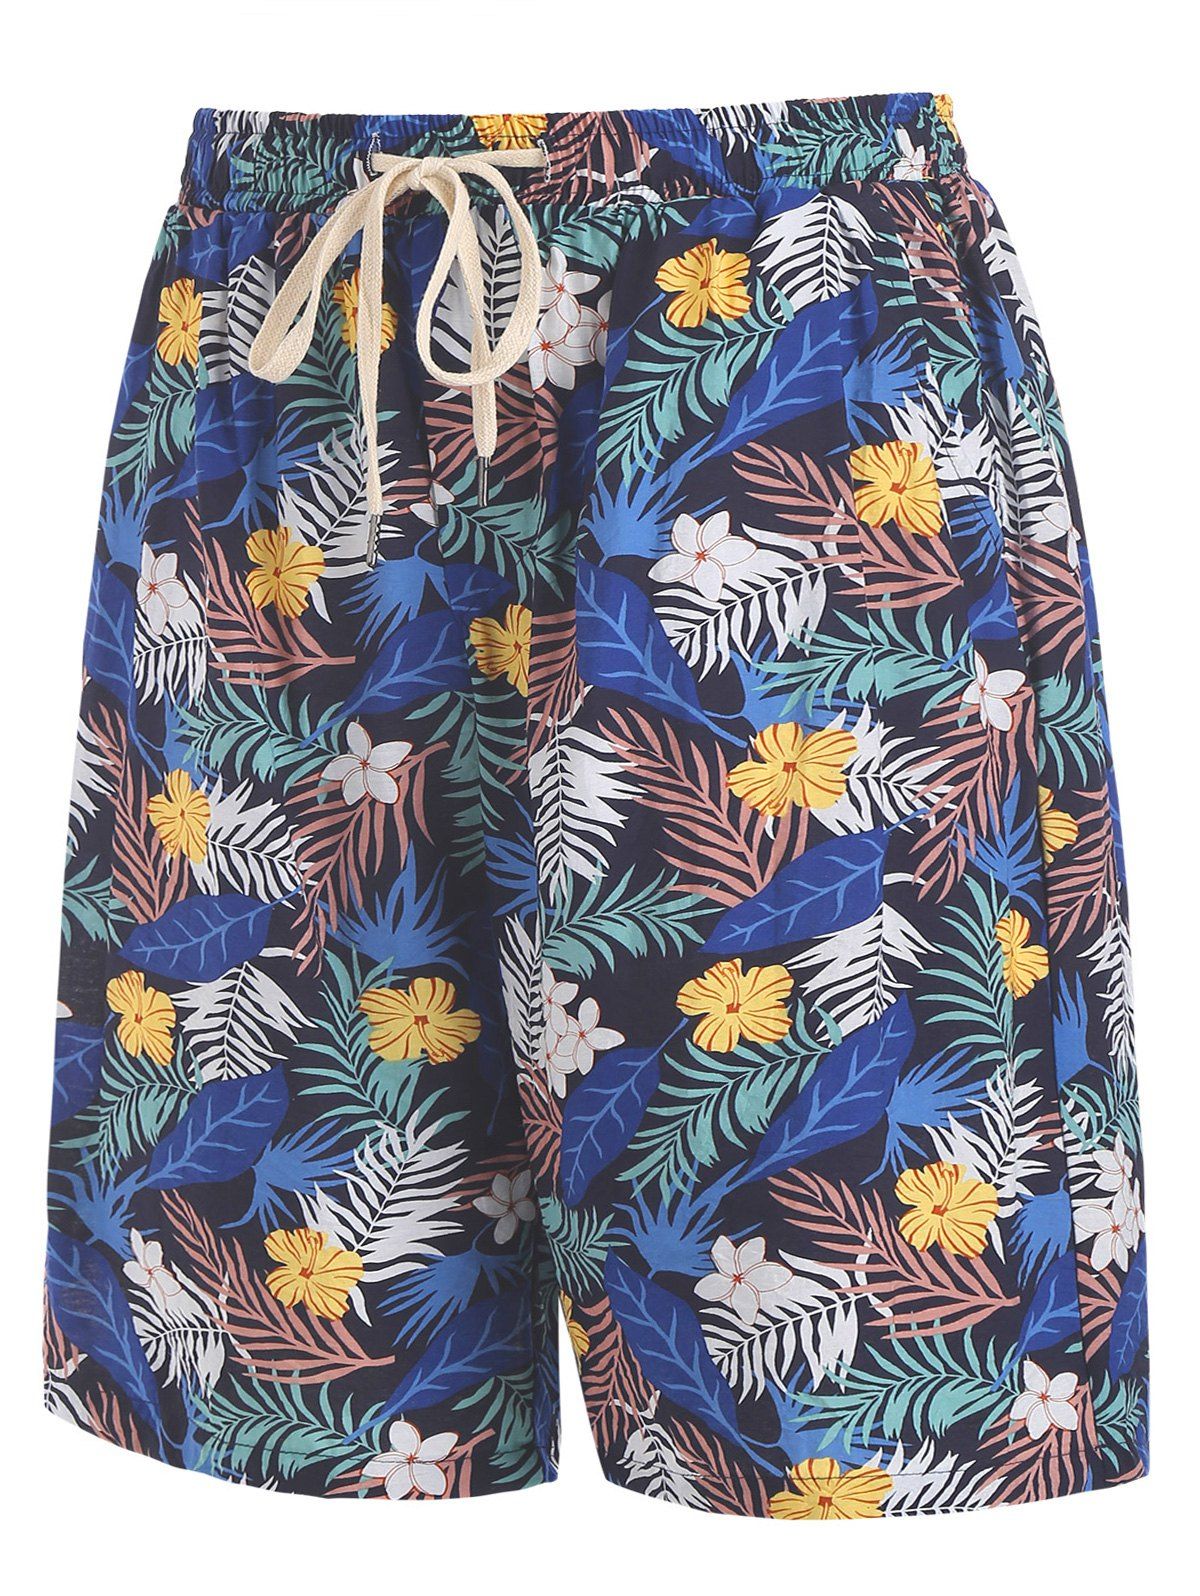 Tropical Floral Leaf Print Hawaii Board Shorts - multicolor A M